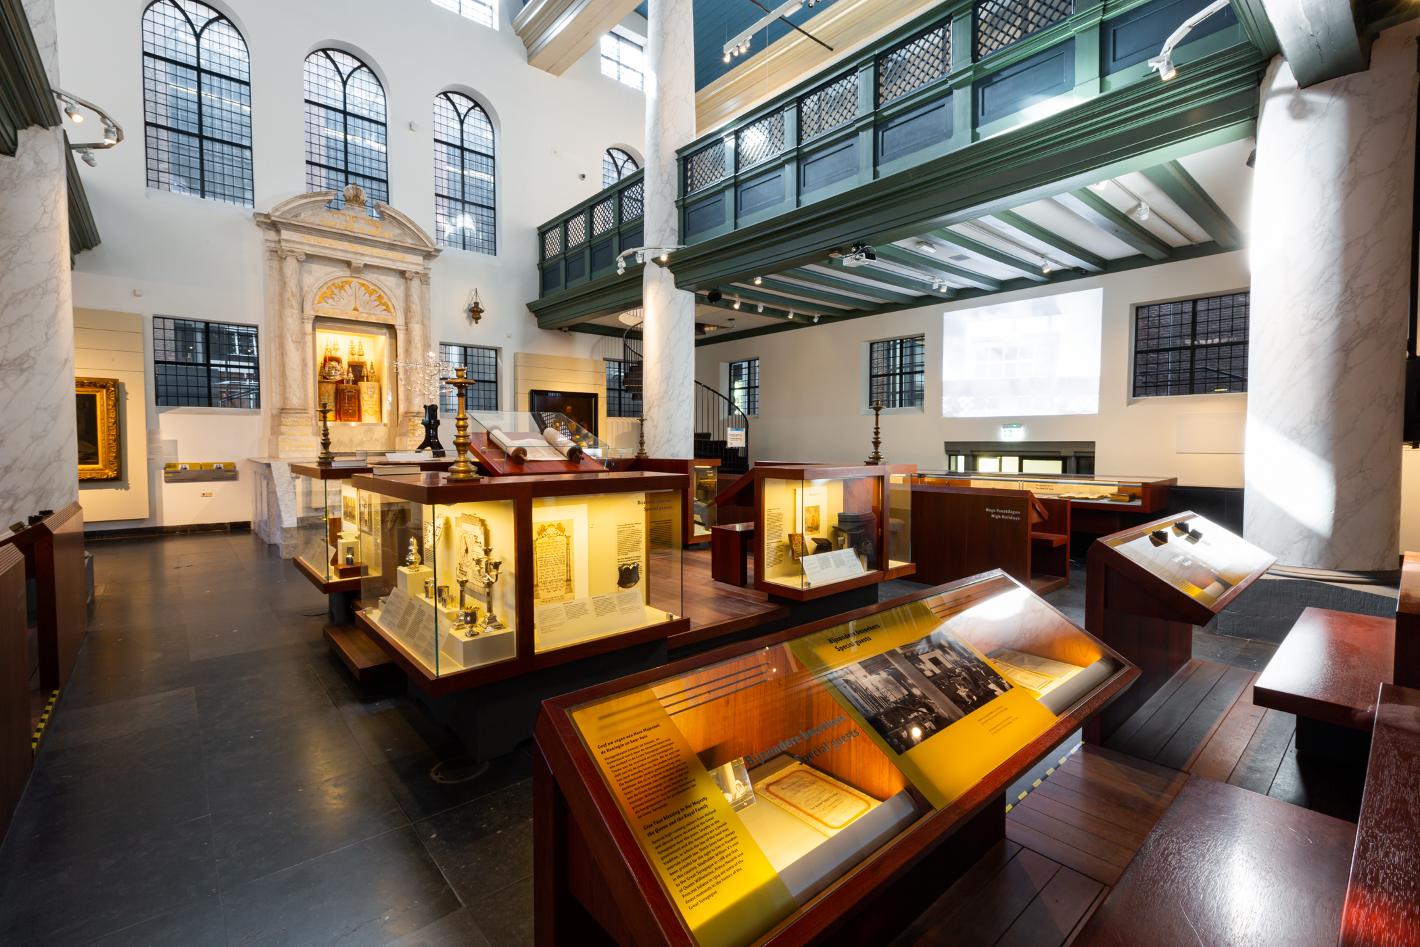 Photo Joods Cultureel Kwartier in Amsterdam, View, Visit museum, Sightseeing - #1